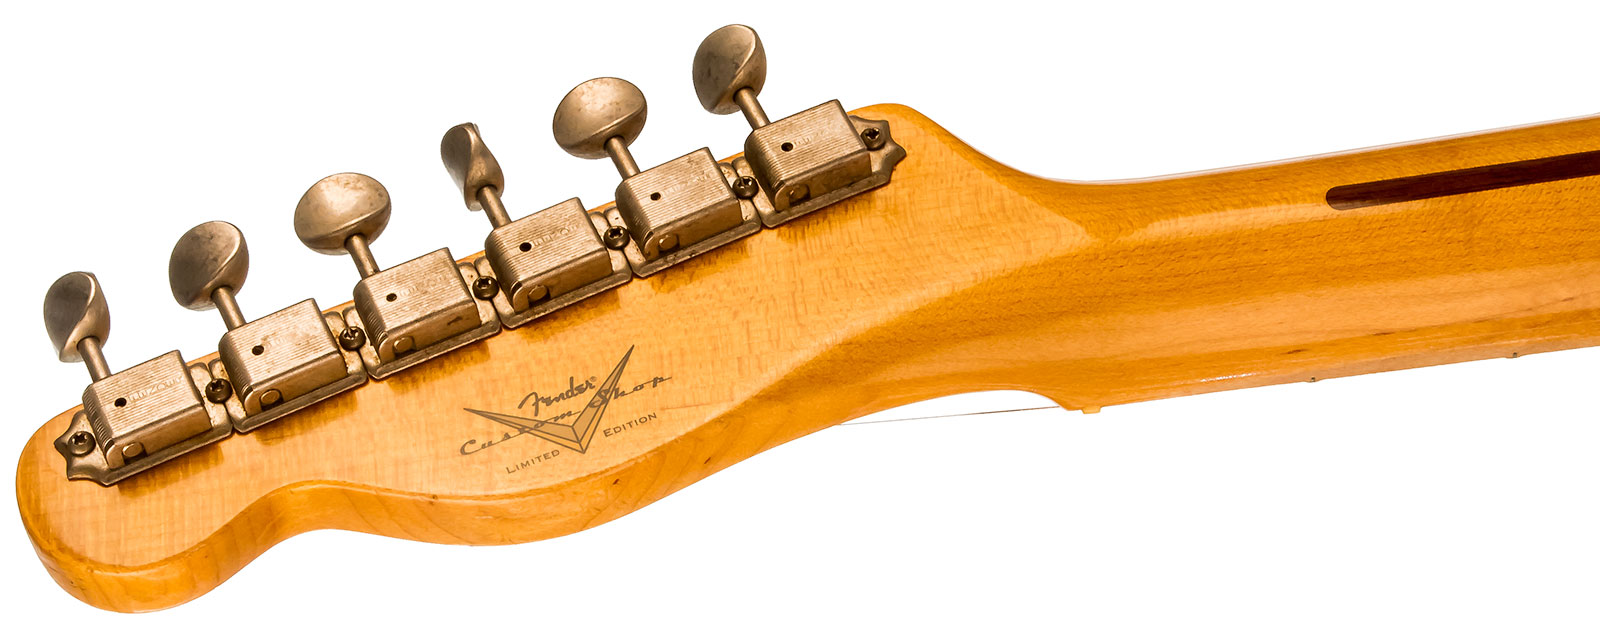 Fender Custom Shop Double Esquire/tele Custom 2s Ht Mn #r97434 - Journeyman Relic Aged Pink Paisley - Semi hollow elektriche gitaar - Variation 6